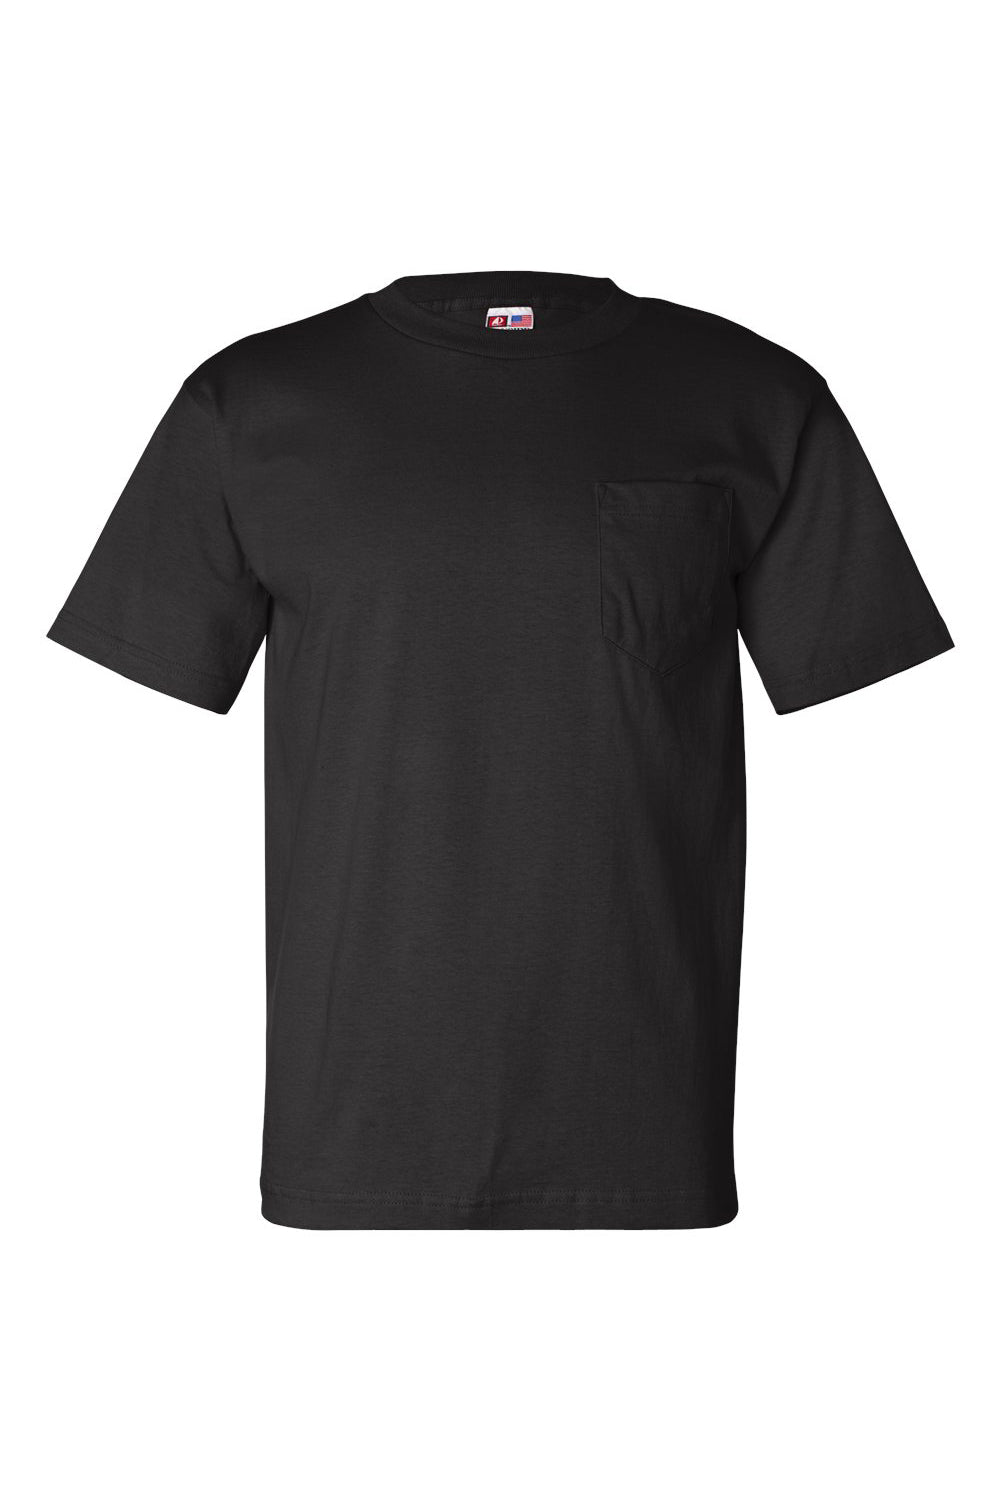 Bayside BA7100 Mens USA Made Short Sleeve Crewneck T-Shirt w/ Pocket Black Flat Front